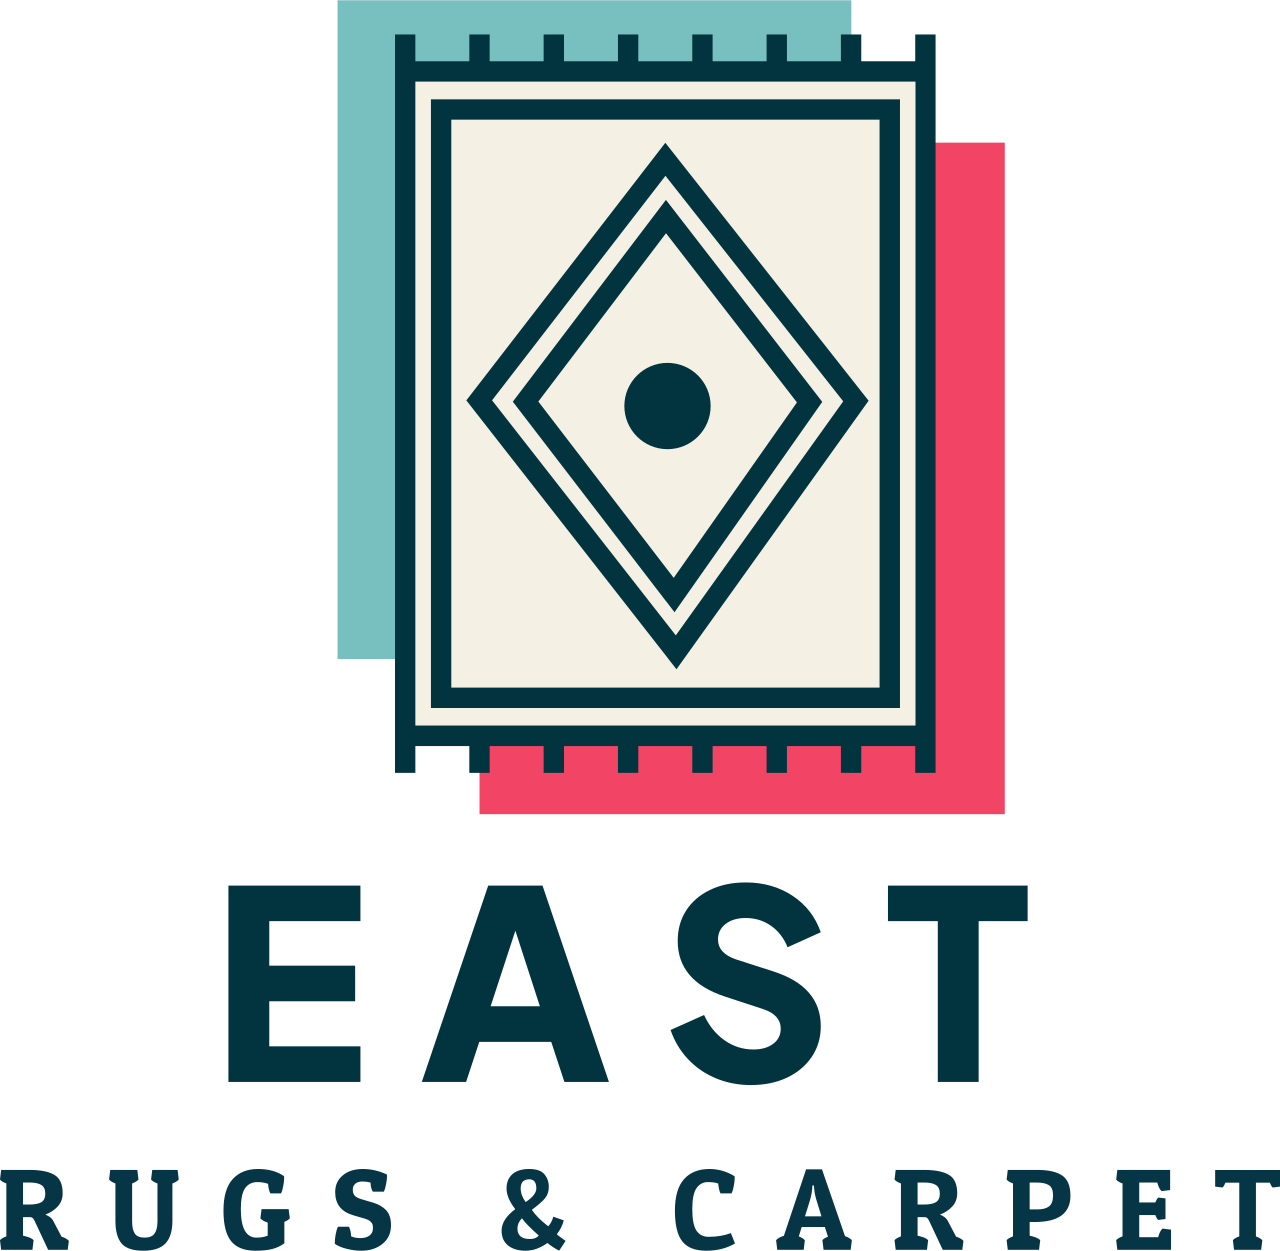 EAST Rugs's logo